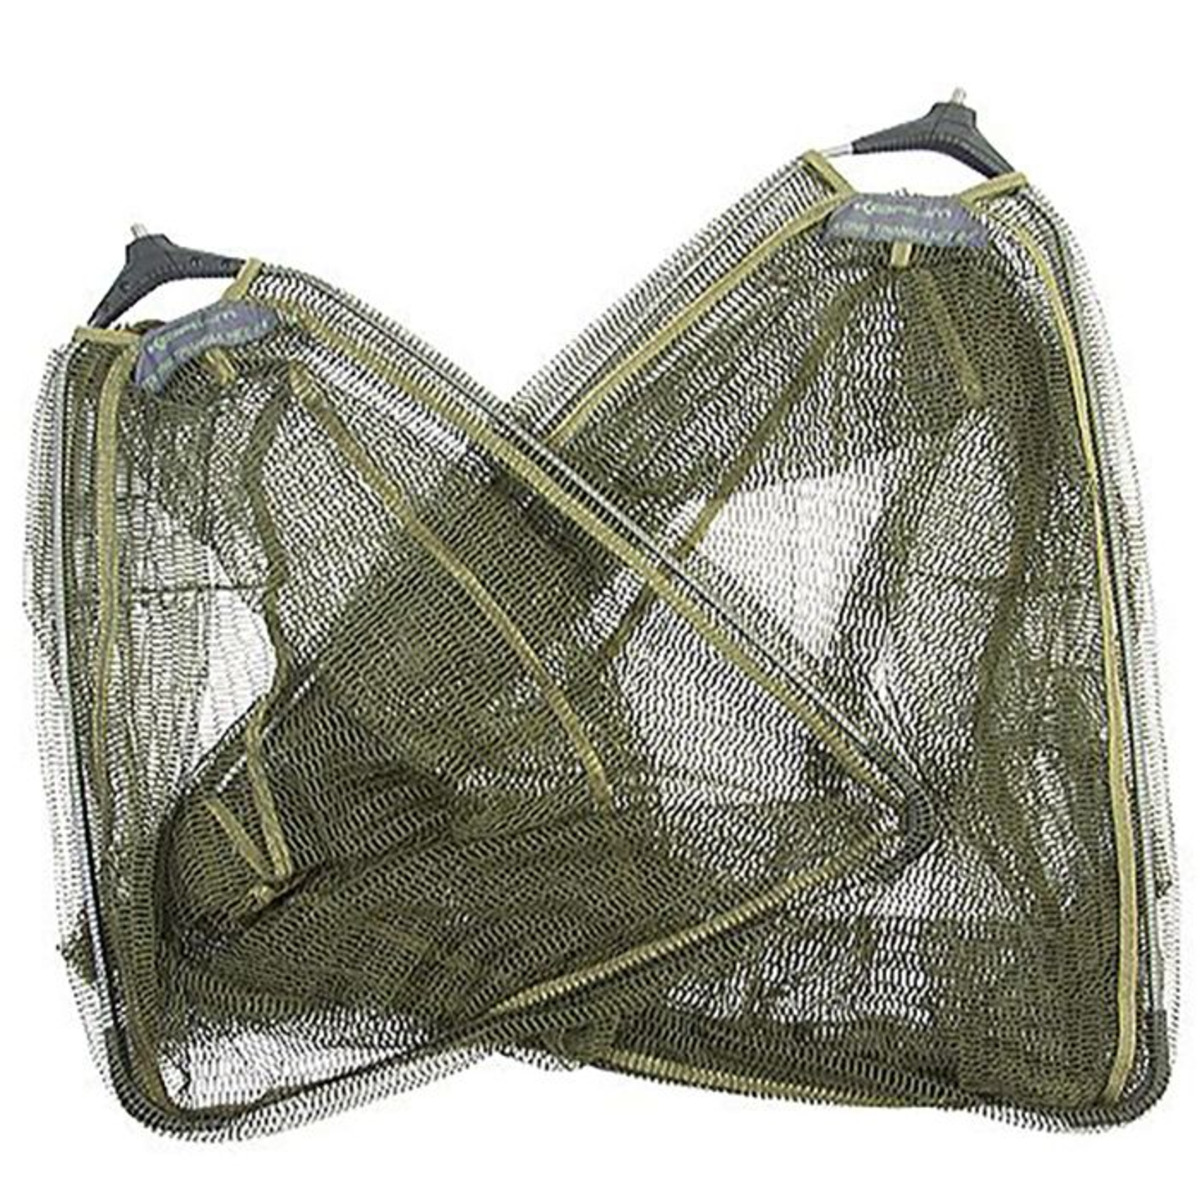 Korum Folding Triangle Net - 60 cm